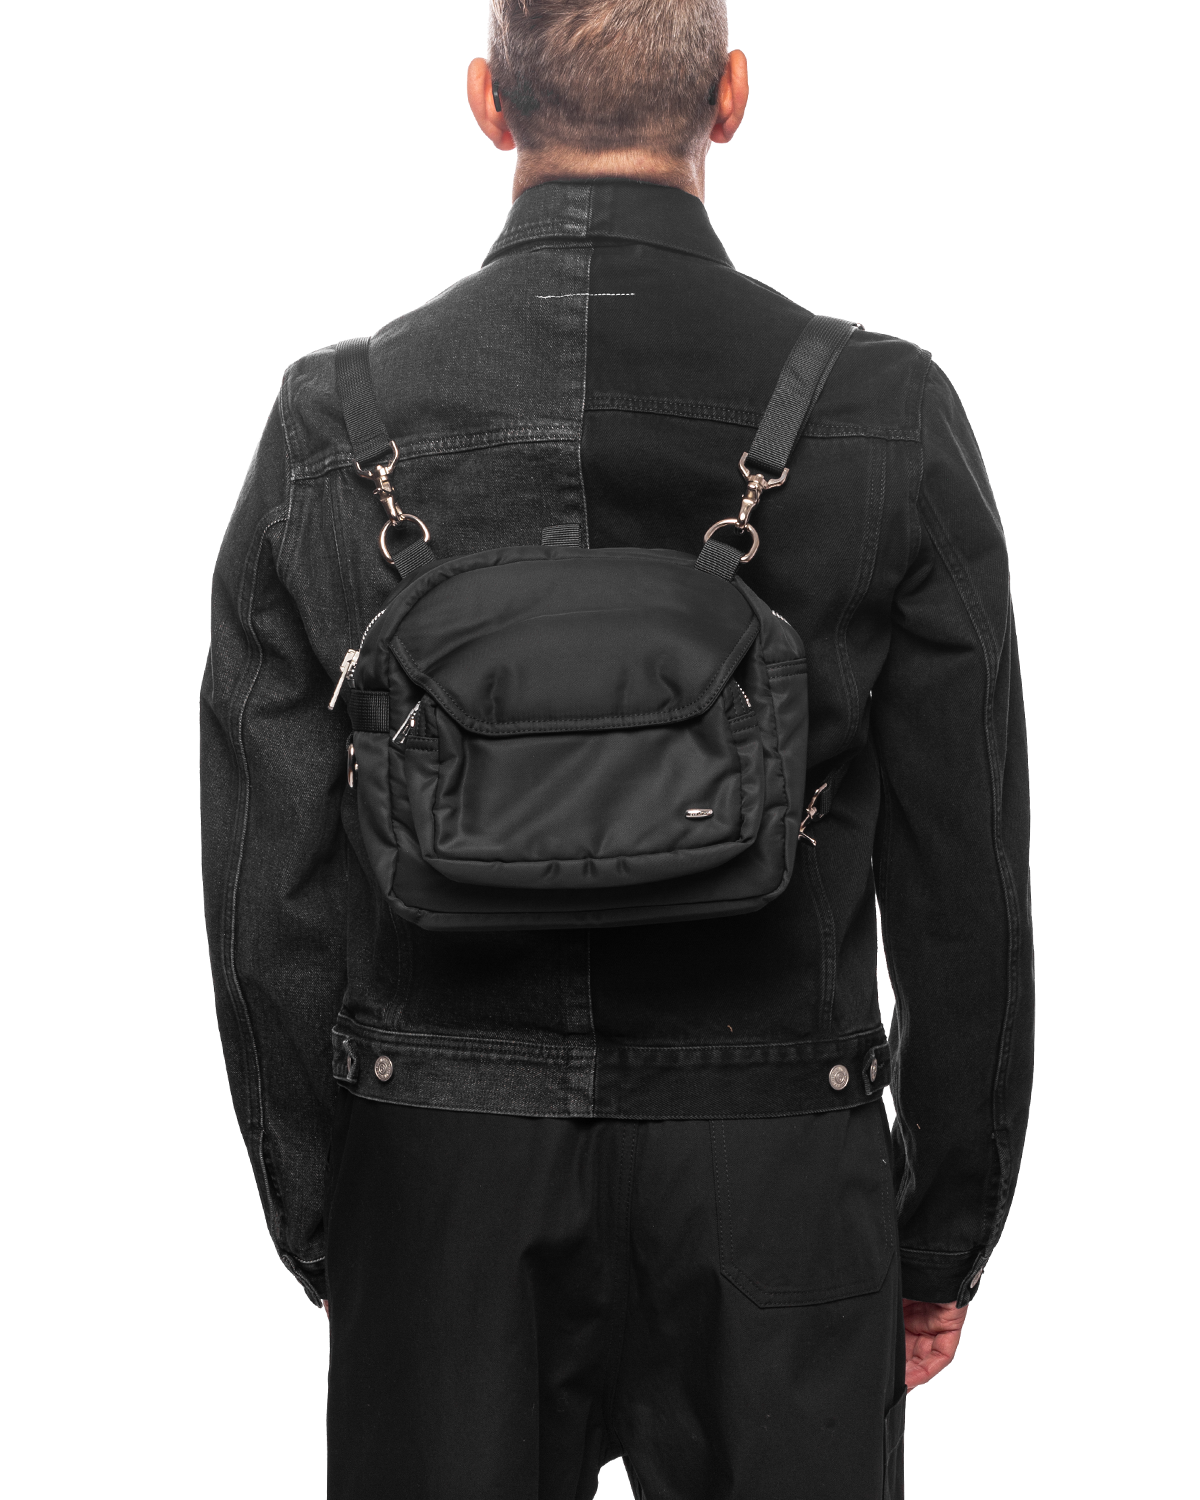 Volta Frontpack Black